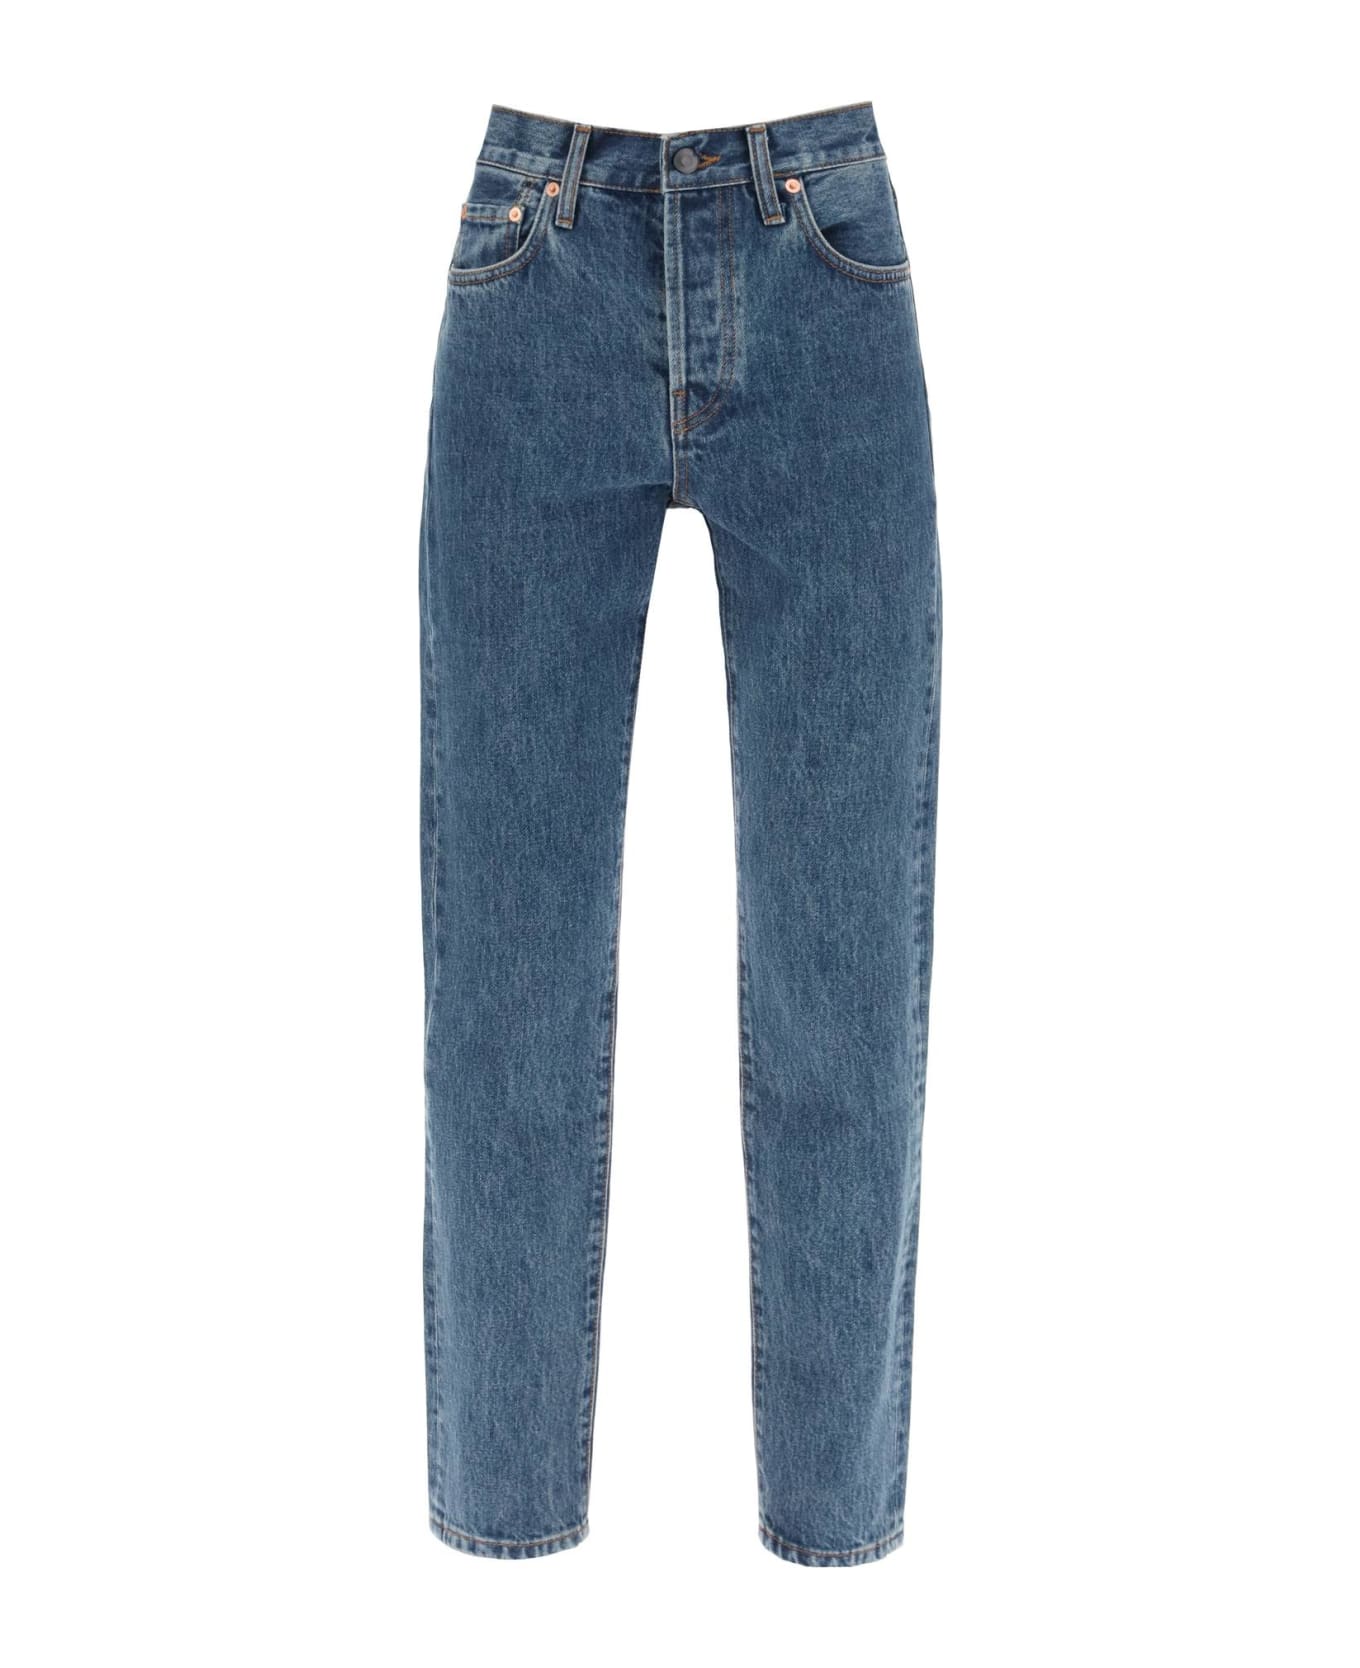 WARDROBE.NYC Slim Jeans With Acid Wash - INDIGO (Blue)